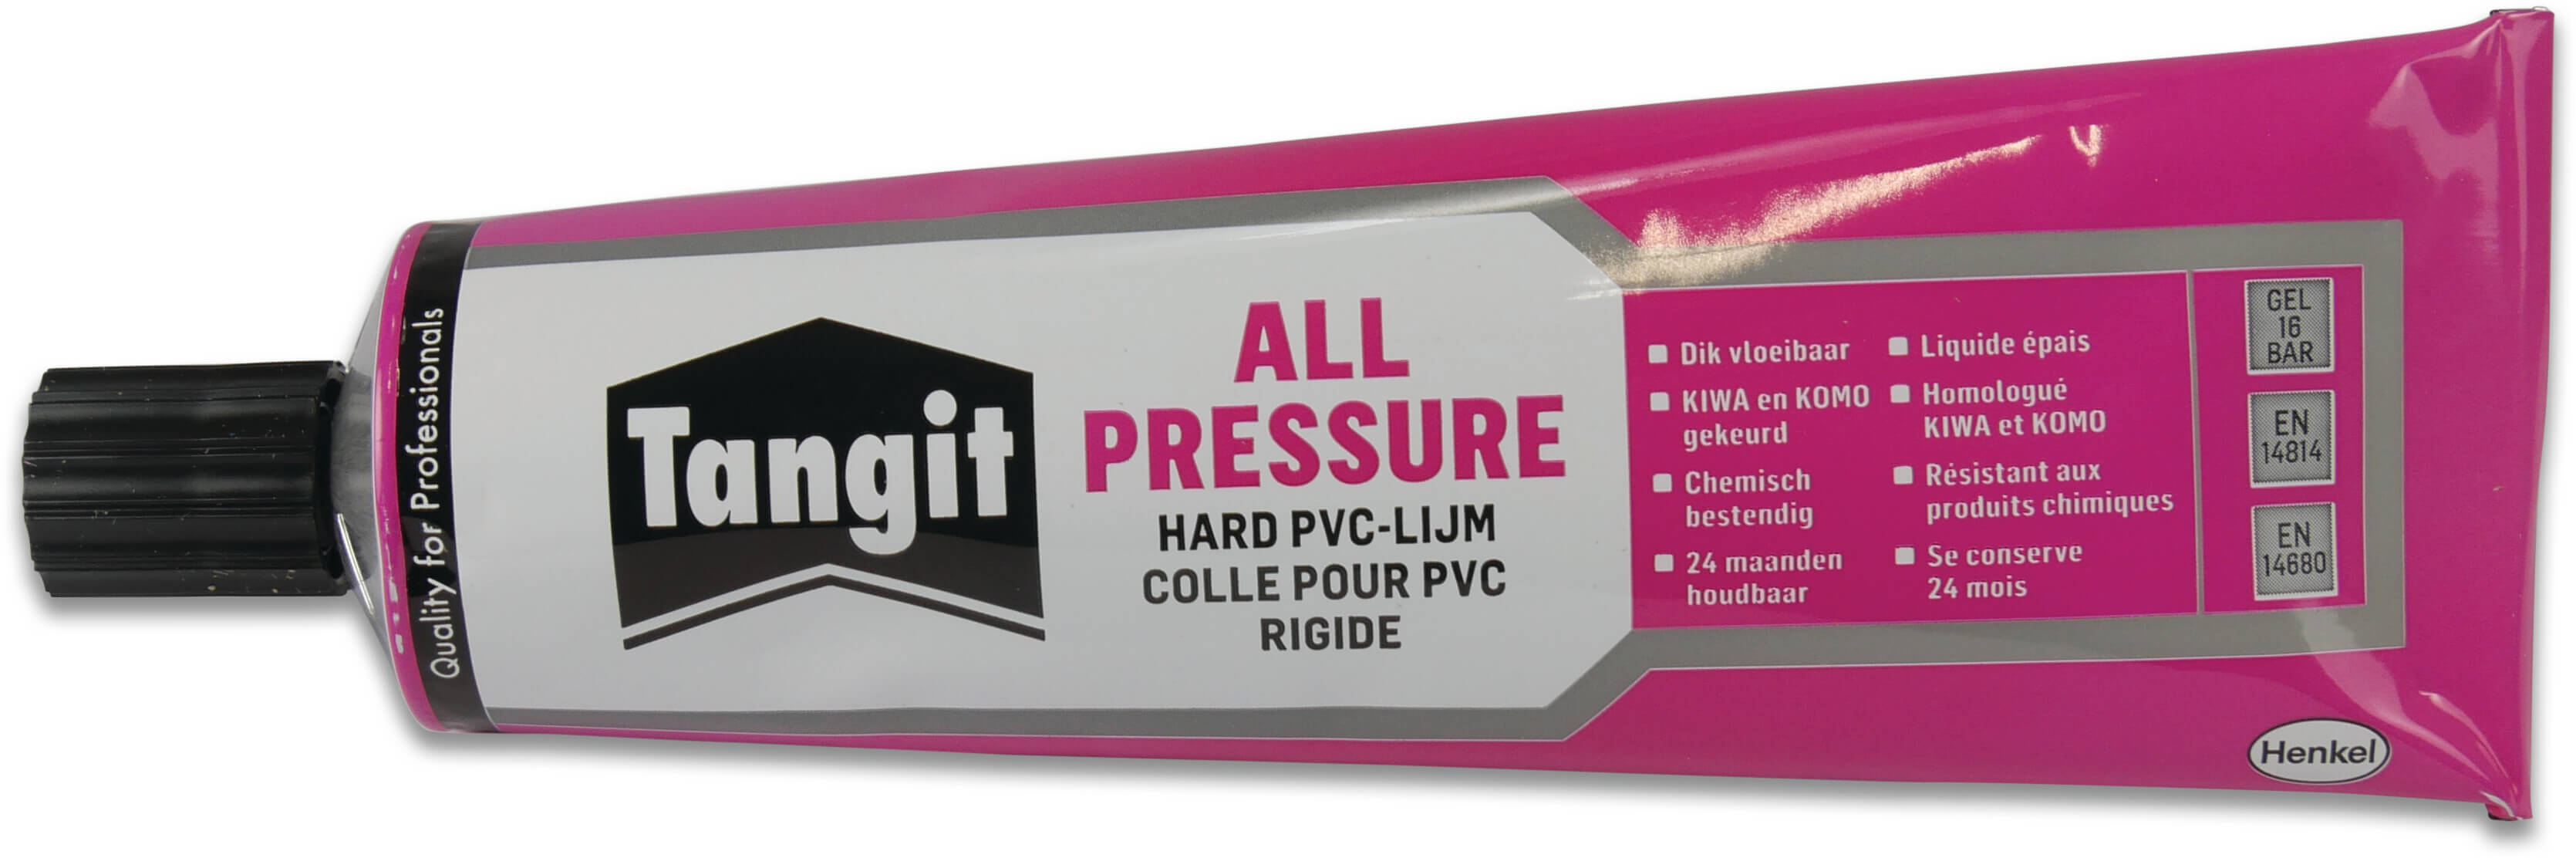 Tangit PVC-lijm 125g tube KIWA type All Pressure label NL/FR